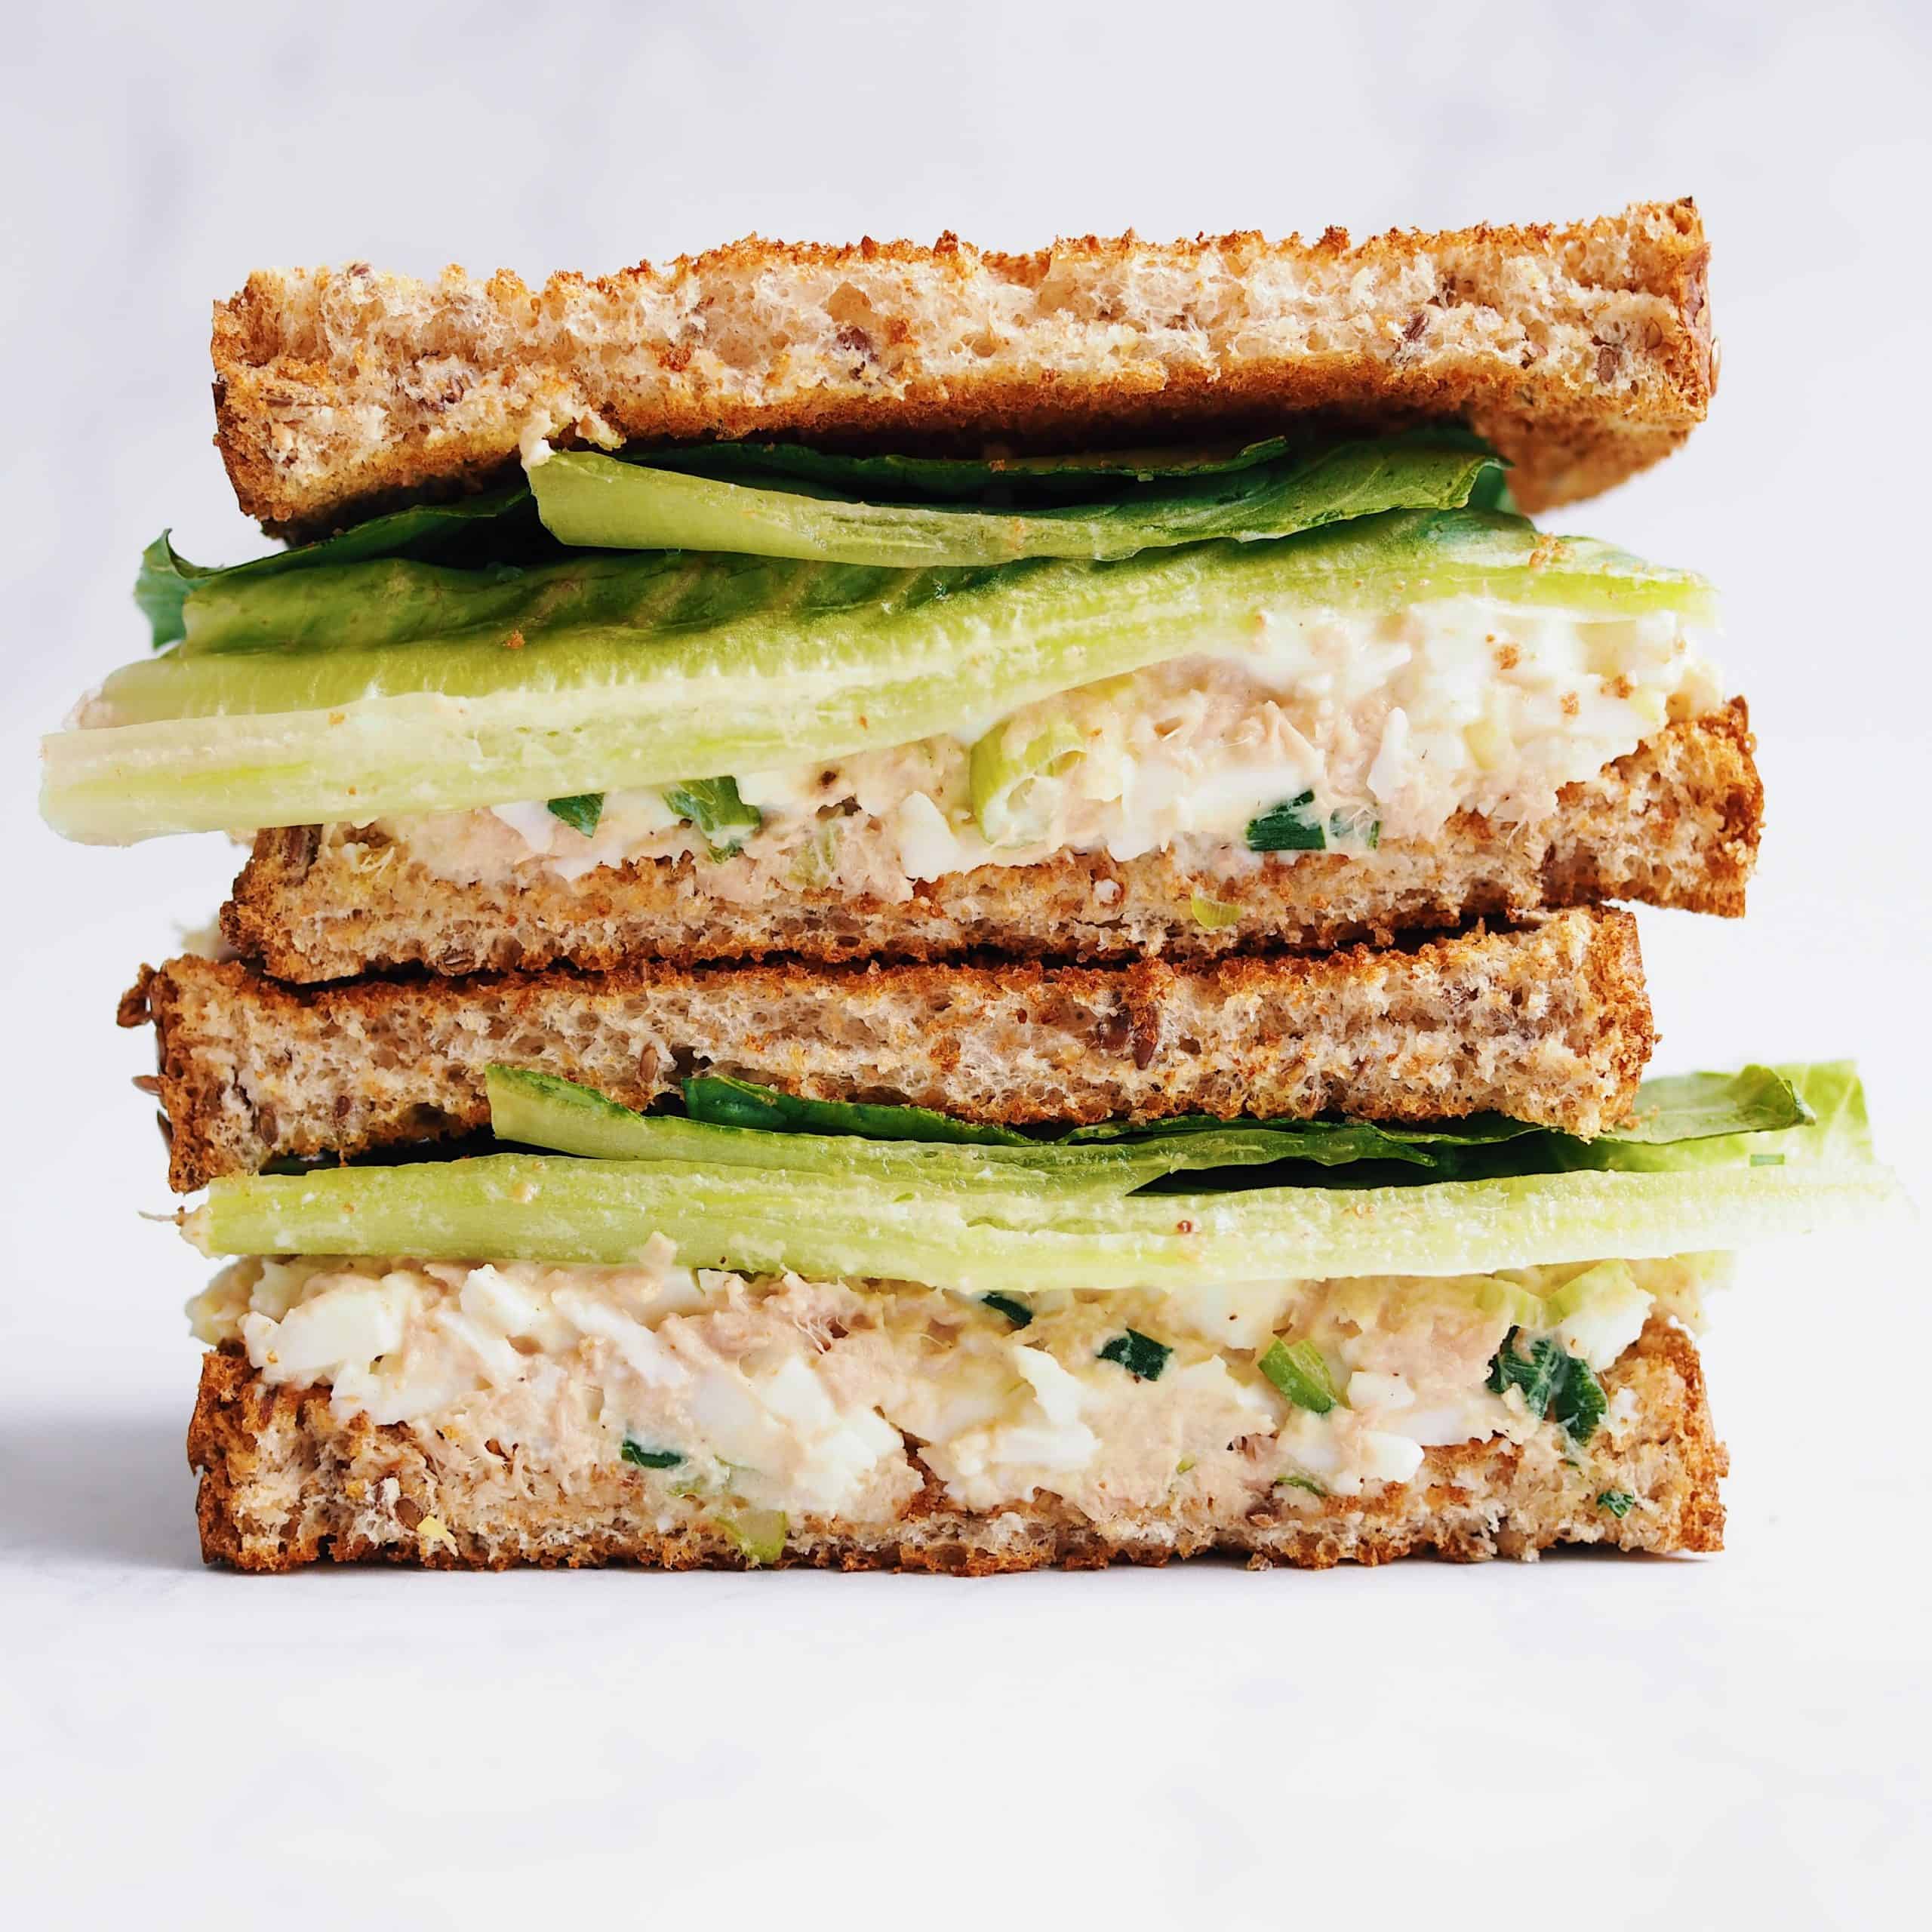 Tuna Egg Salad Sandwich (10 minute Recipe)